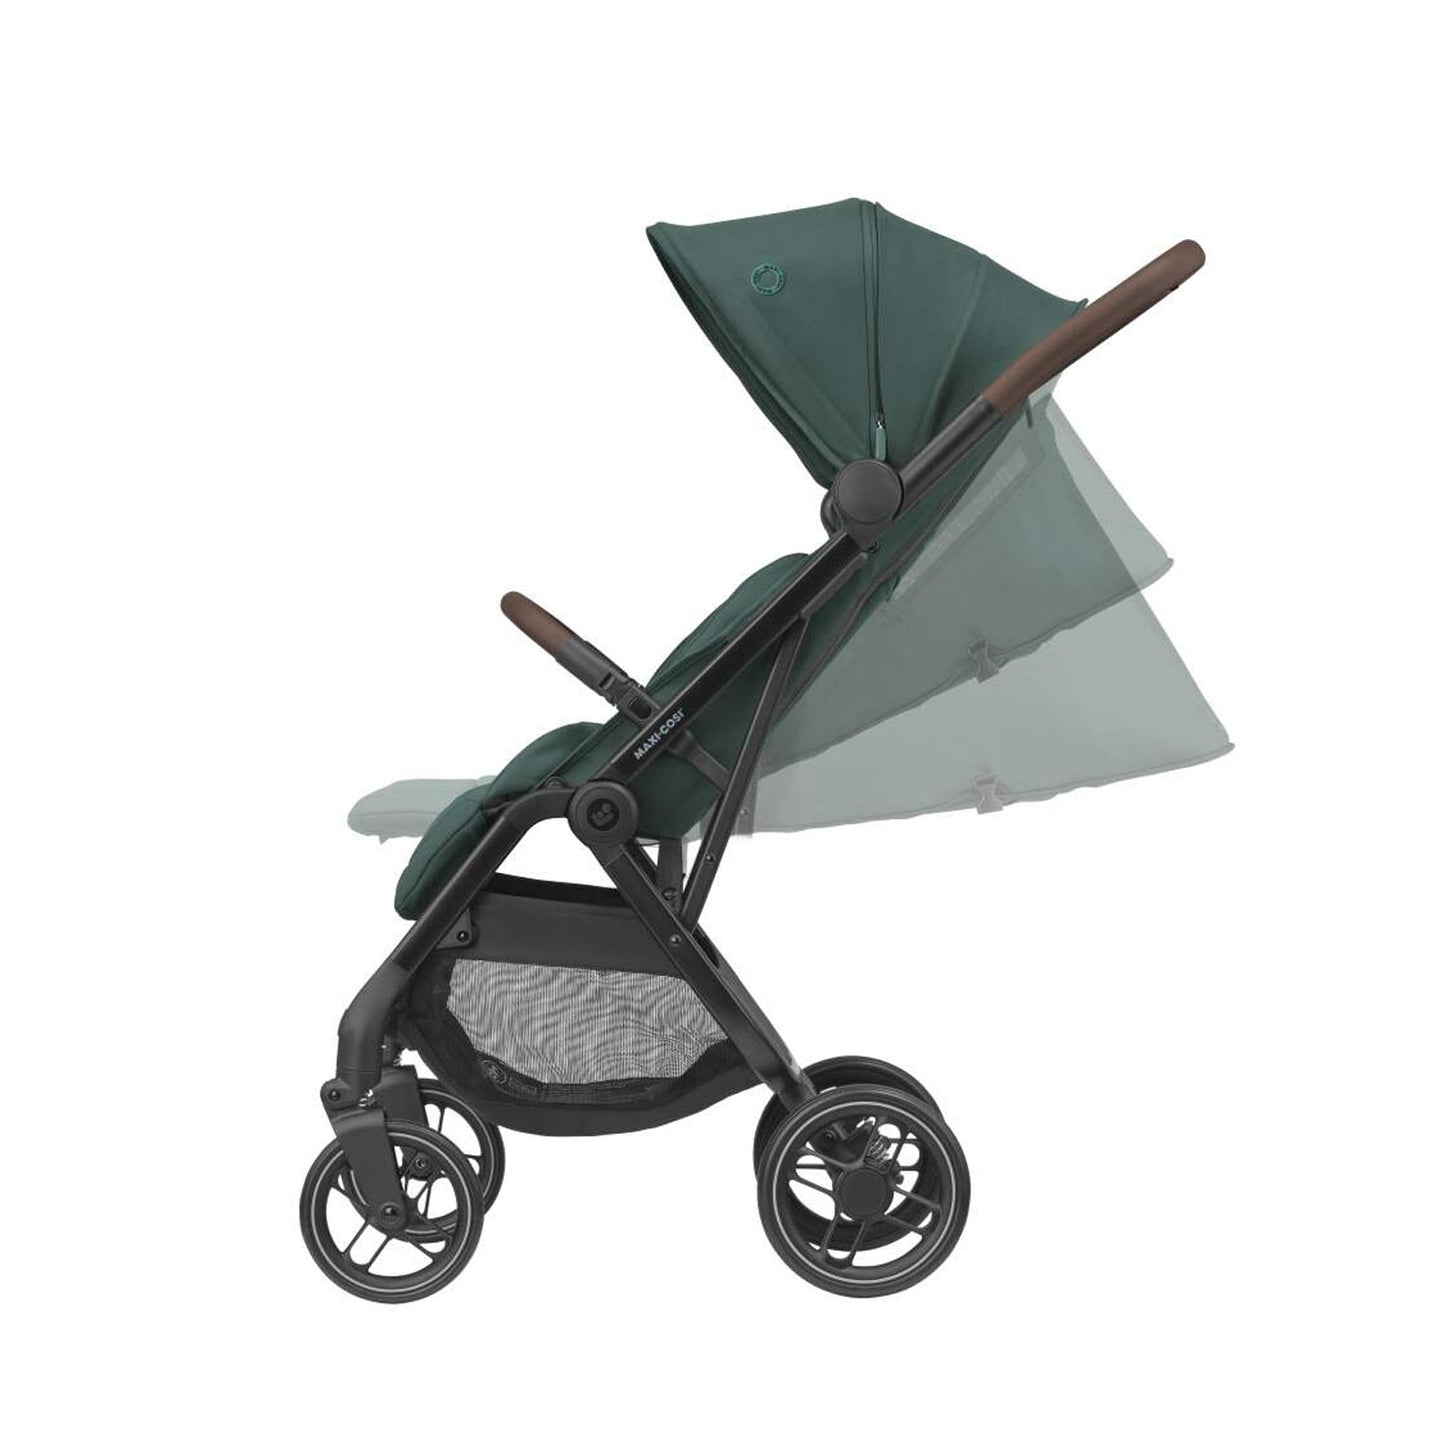 Maxi Cosi - Soho quick fold stroller